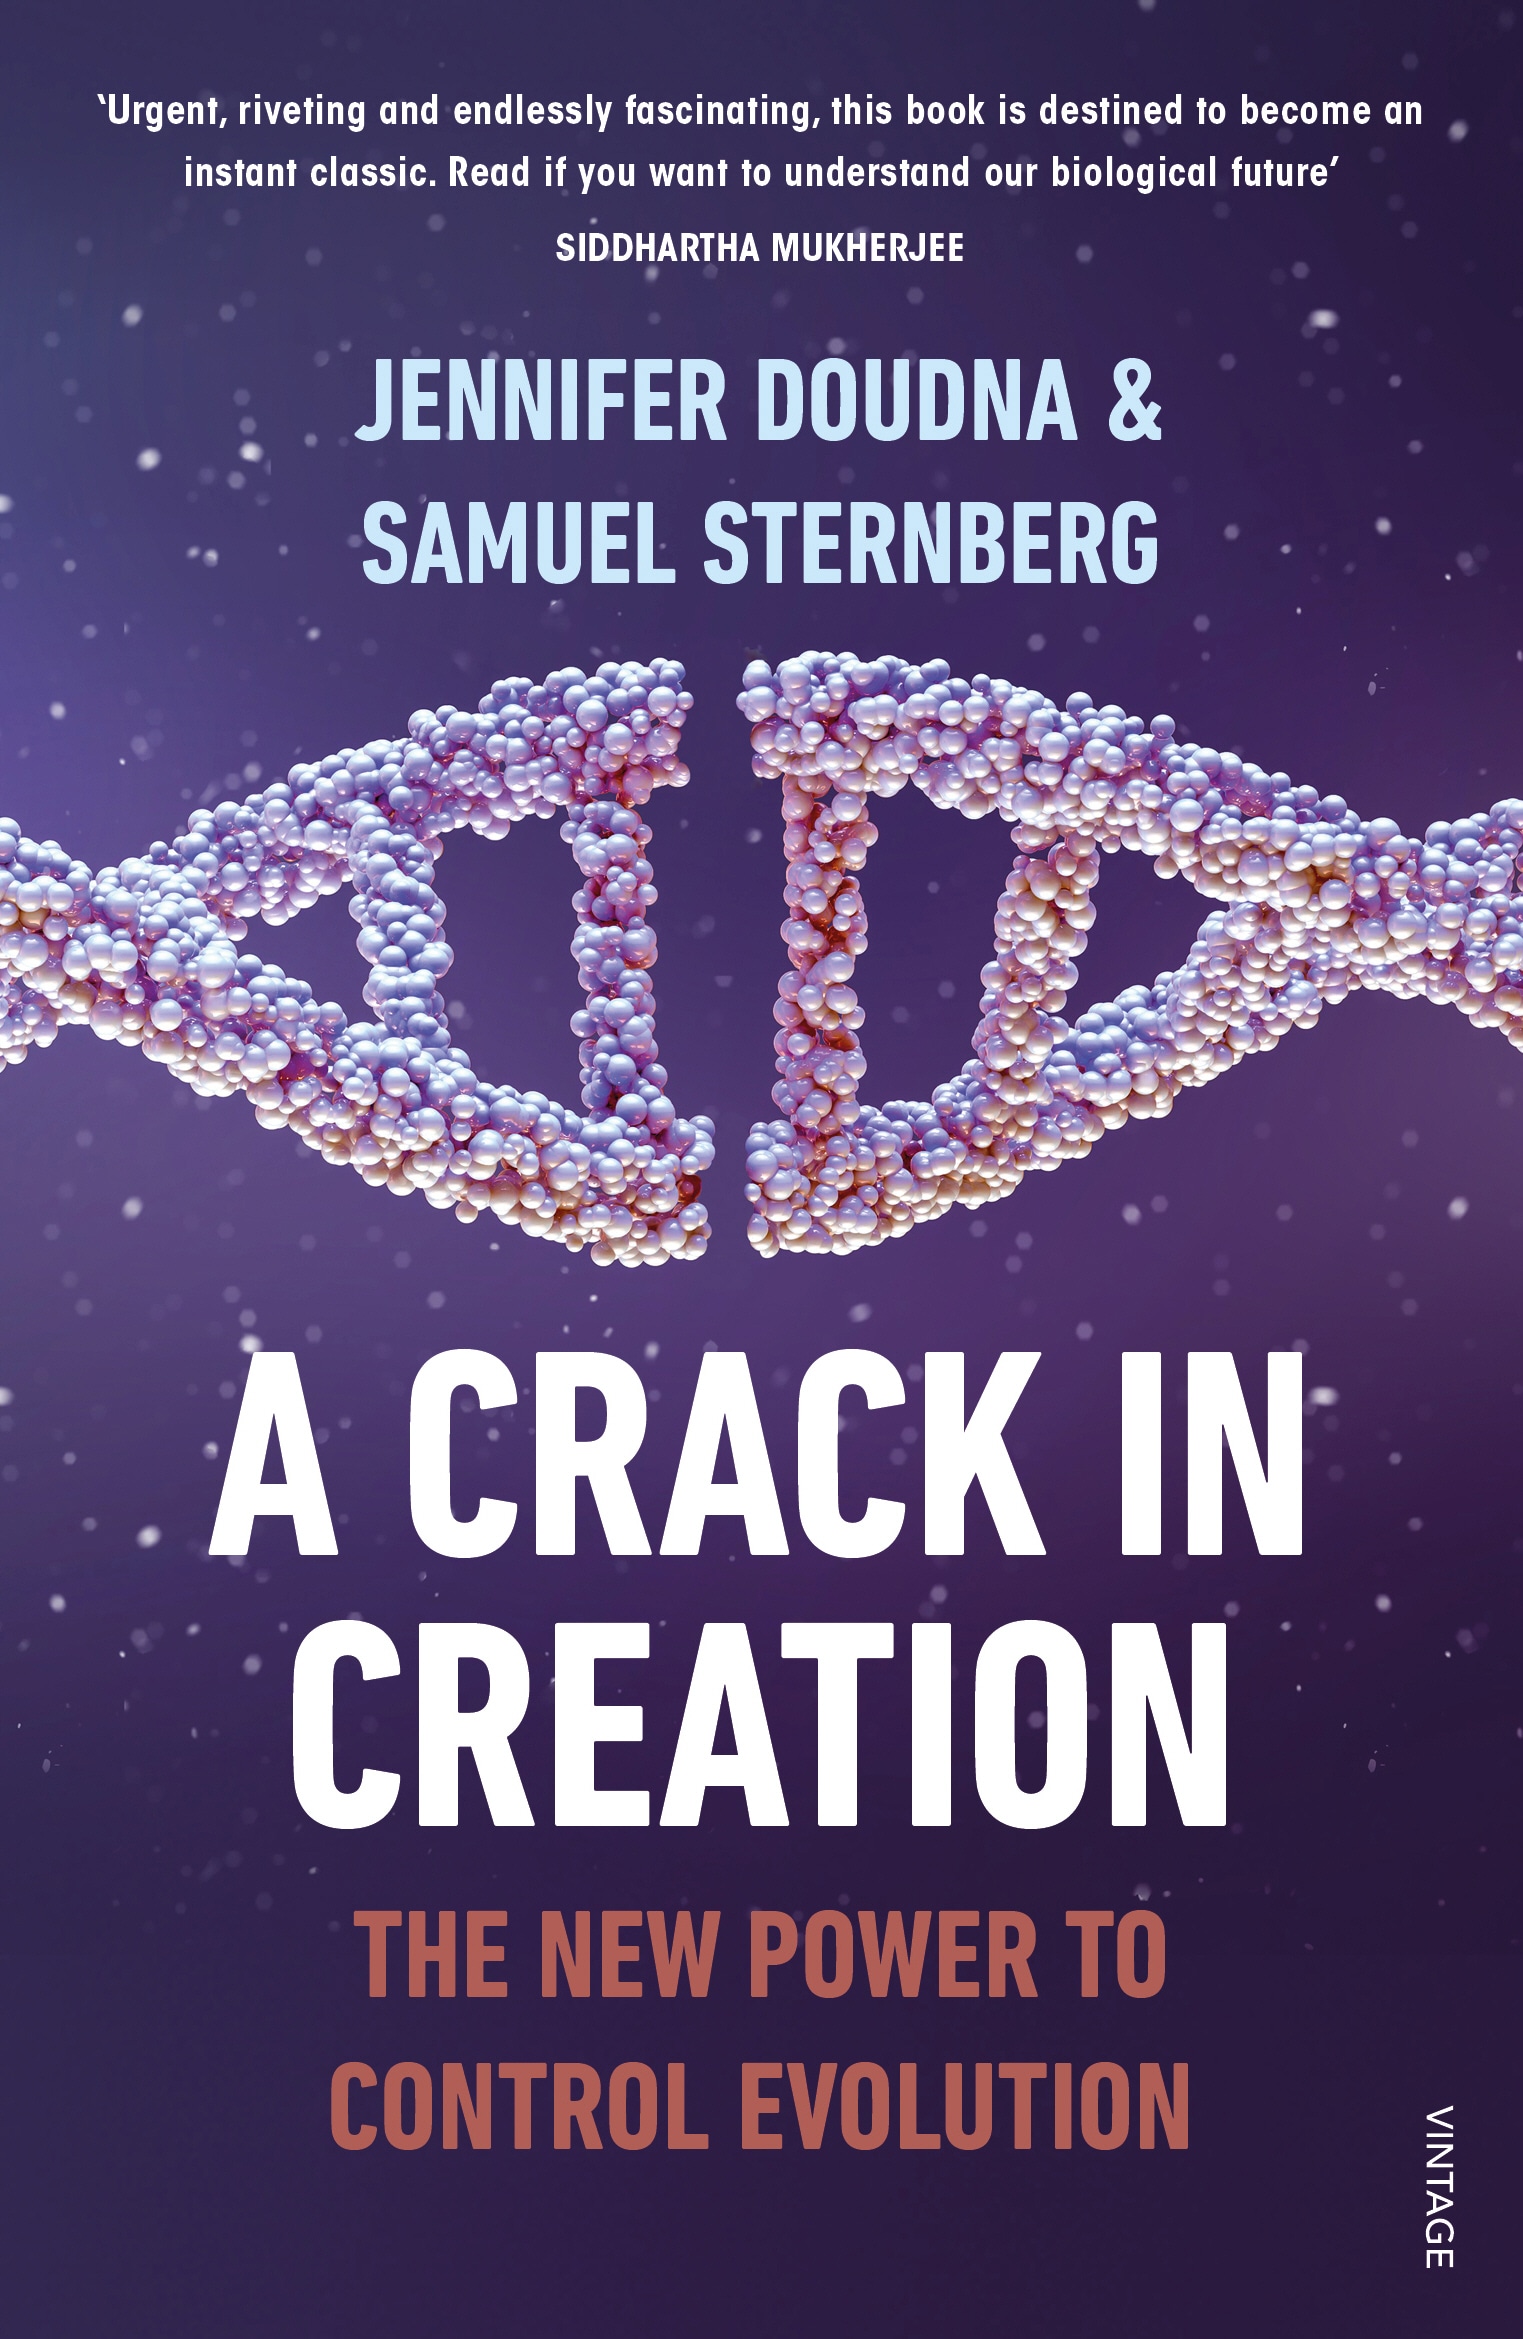 Book “A Crack in Creation” by Jennifer Doudna, Samuel Sternberg — June 14, 2018